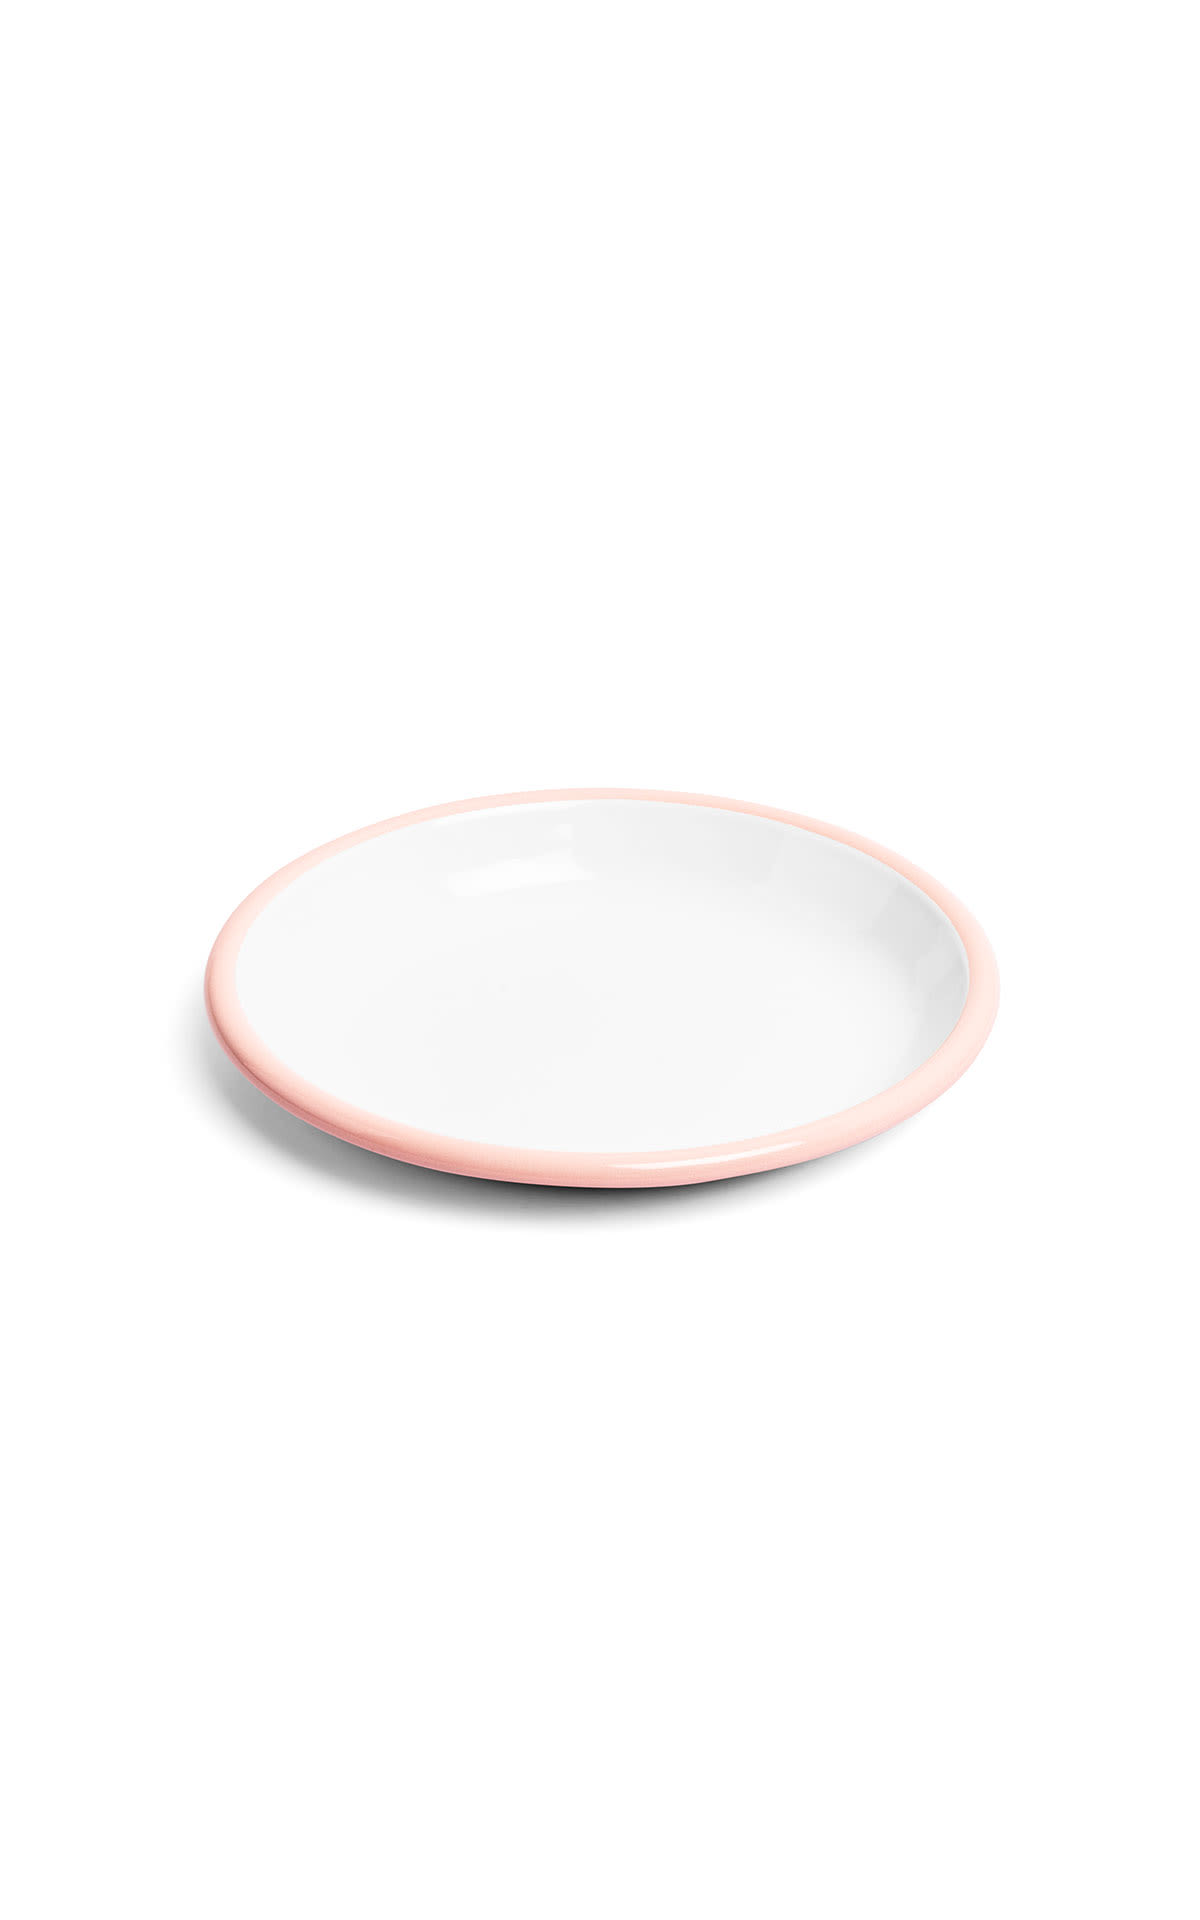 Bamford White pink enamel plate from Bicester Village